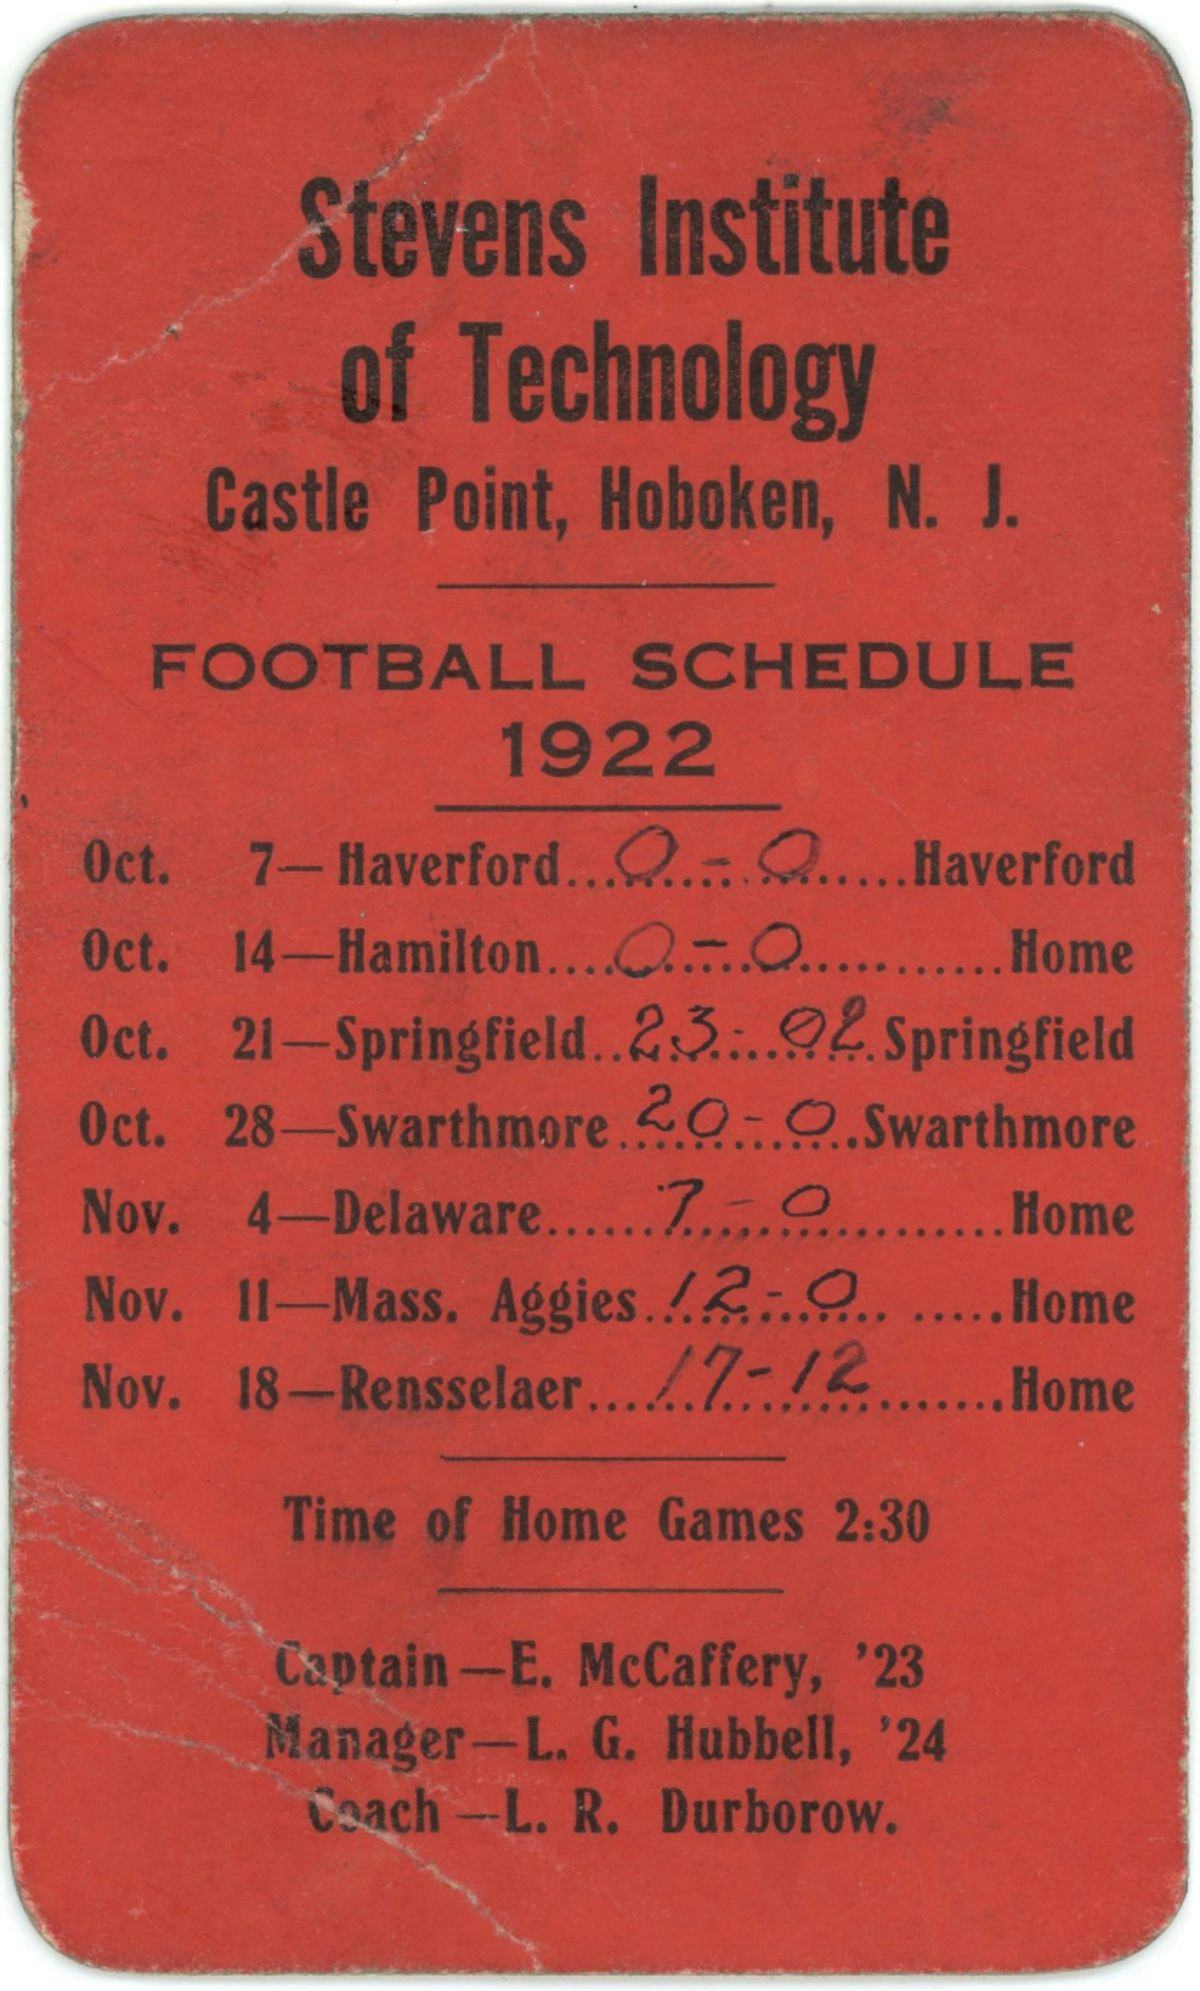 Stevens Football schedule from 1922.